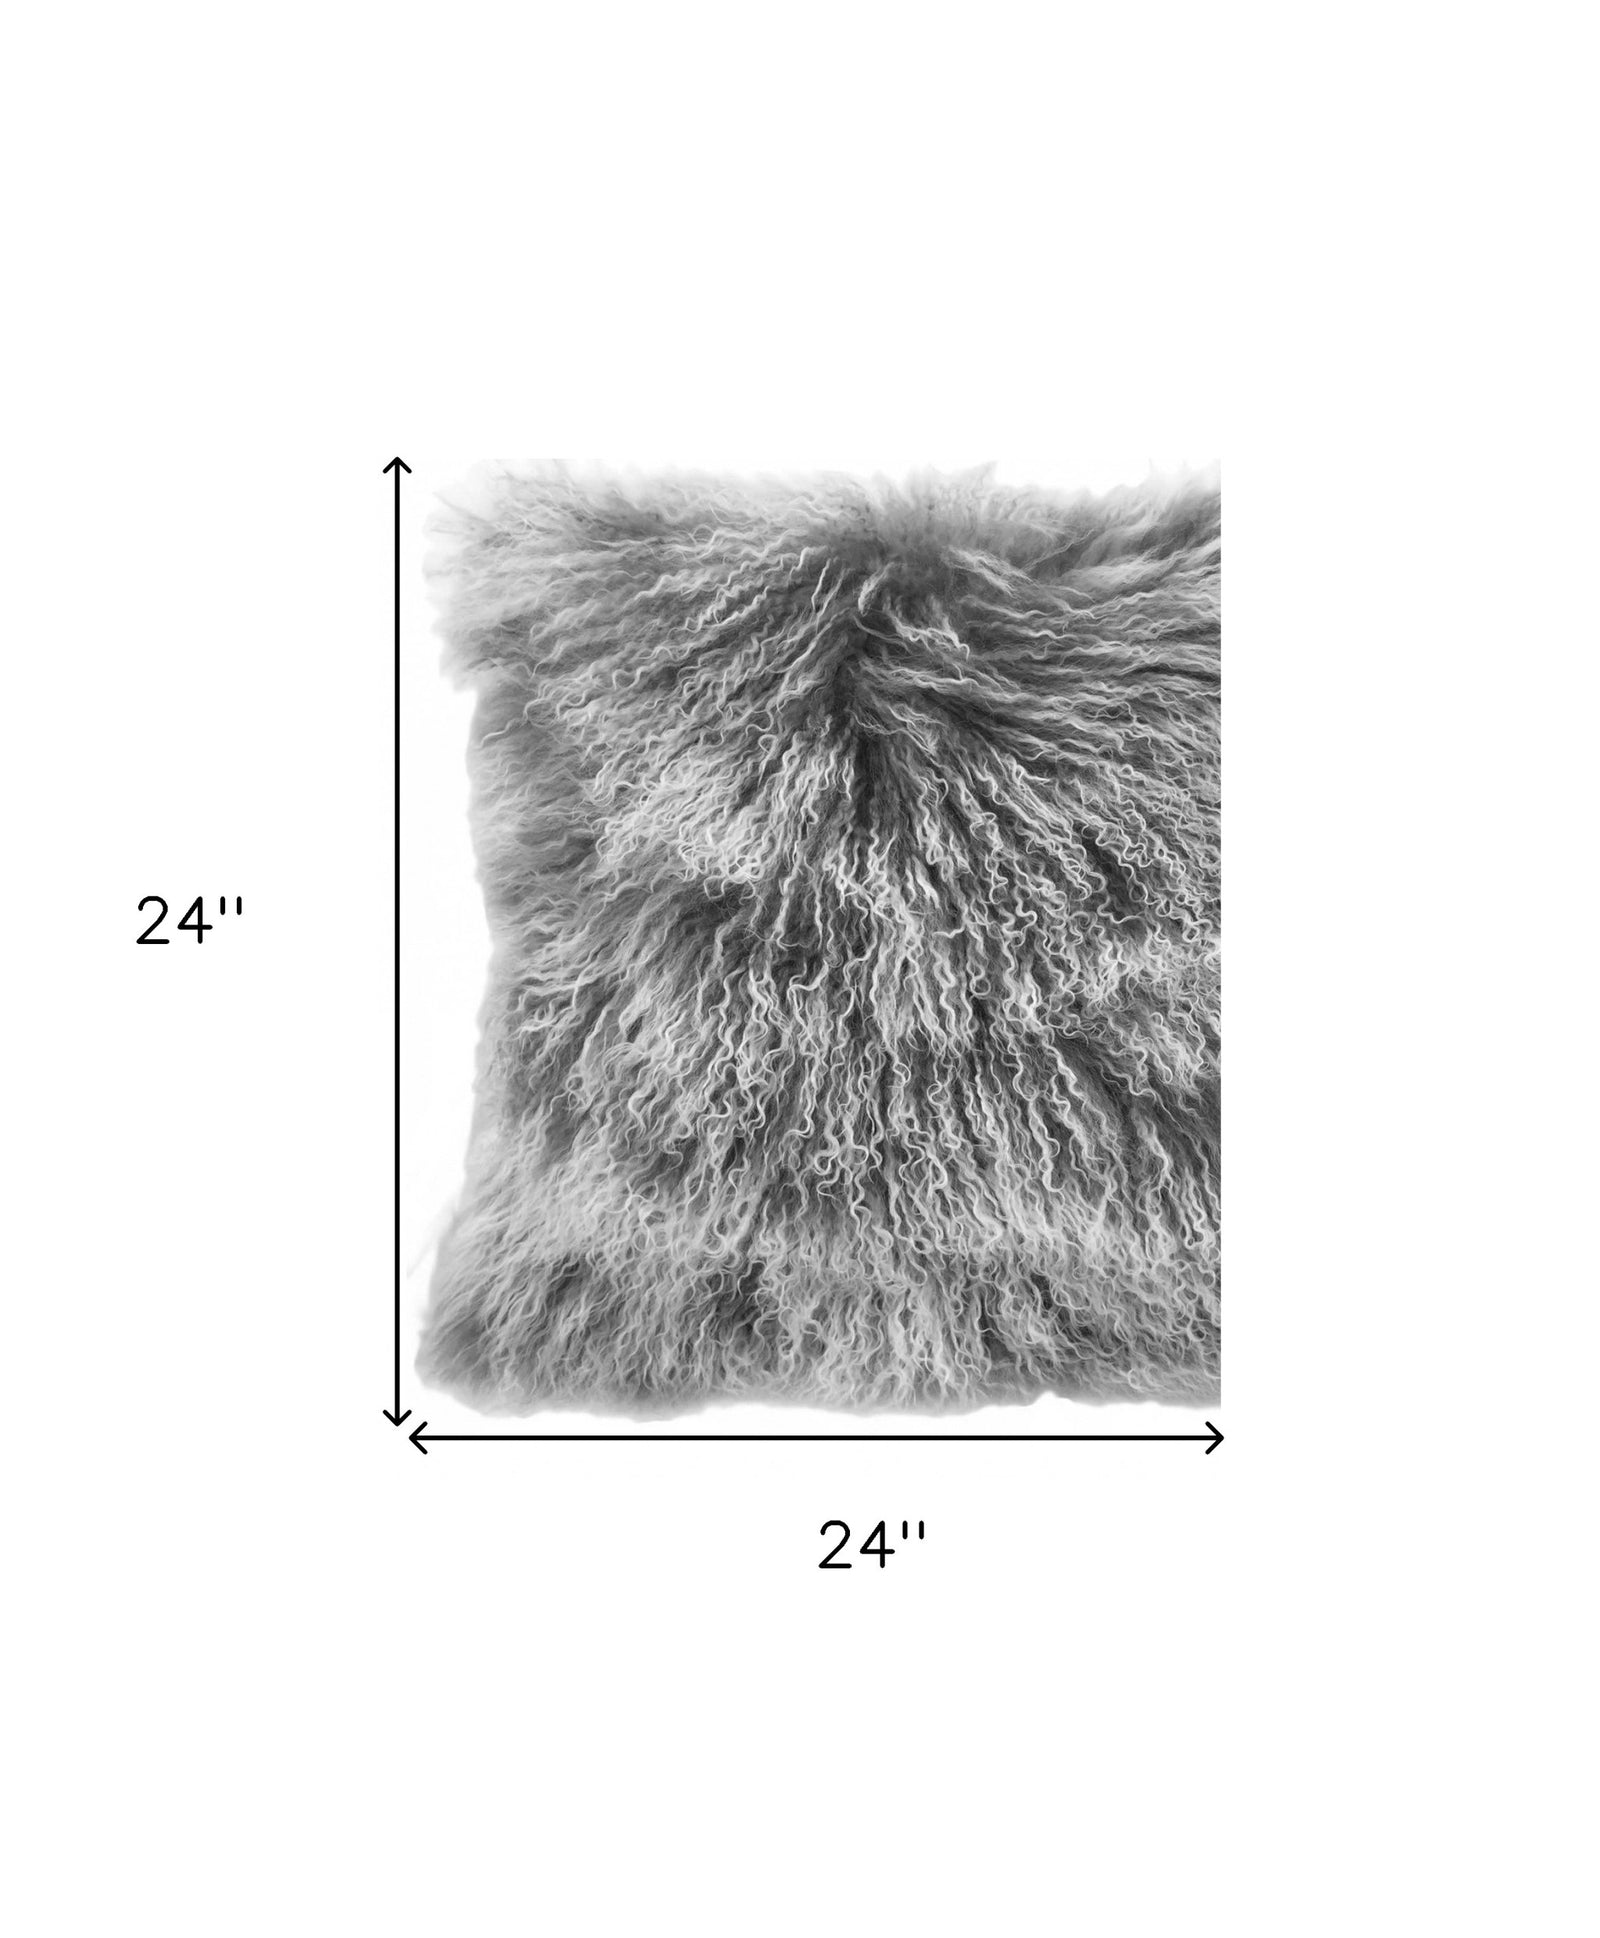 24" Grey Genuine Tibetan Lamb Fur Pillow With Microsuede Backing